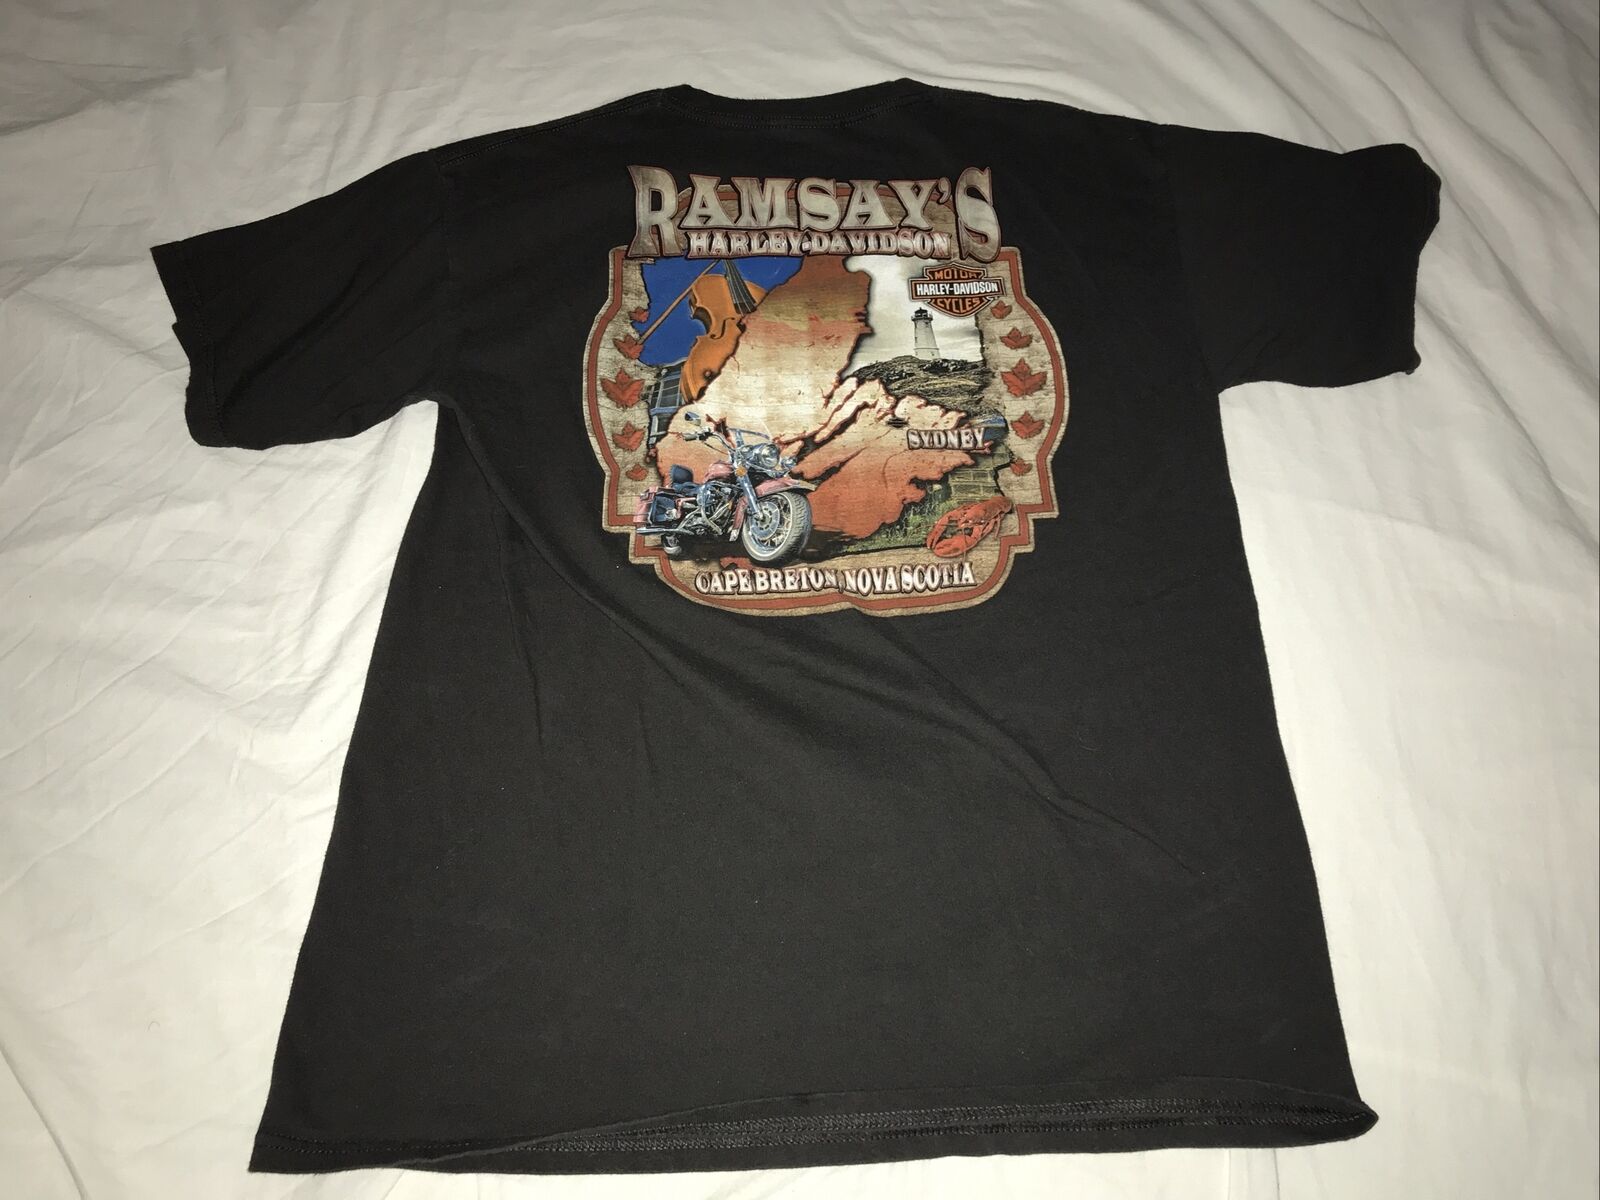 Mens Harley Davidson Ramsay's Cape Breton NS Tee Shirt Size Large Black